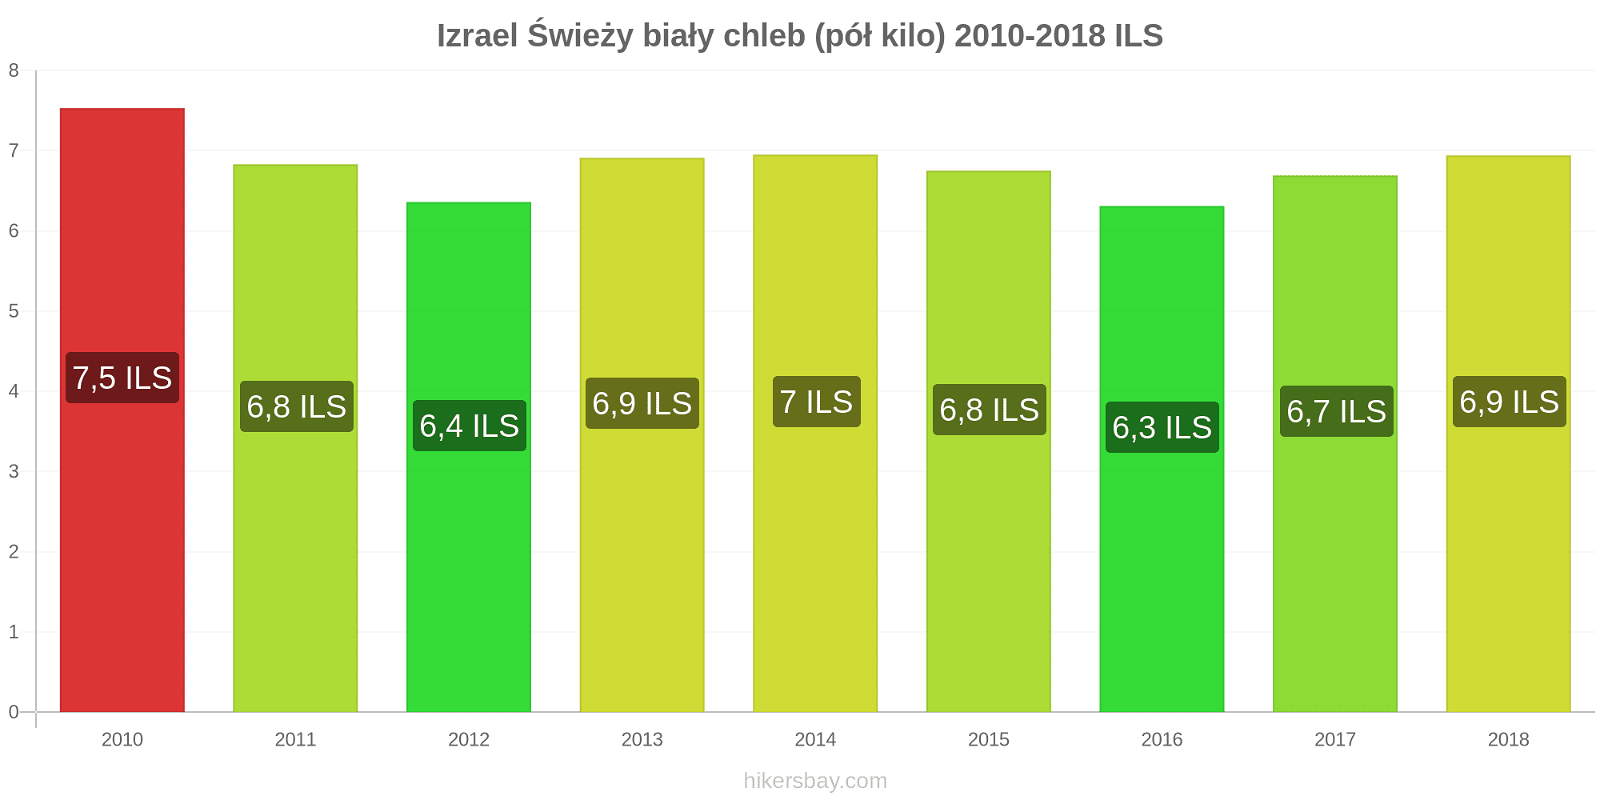 Izrael zmiany cen Chleb pół kilo hikersbay.com